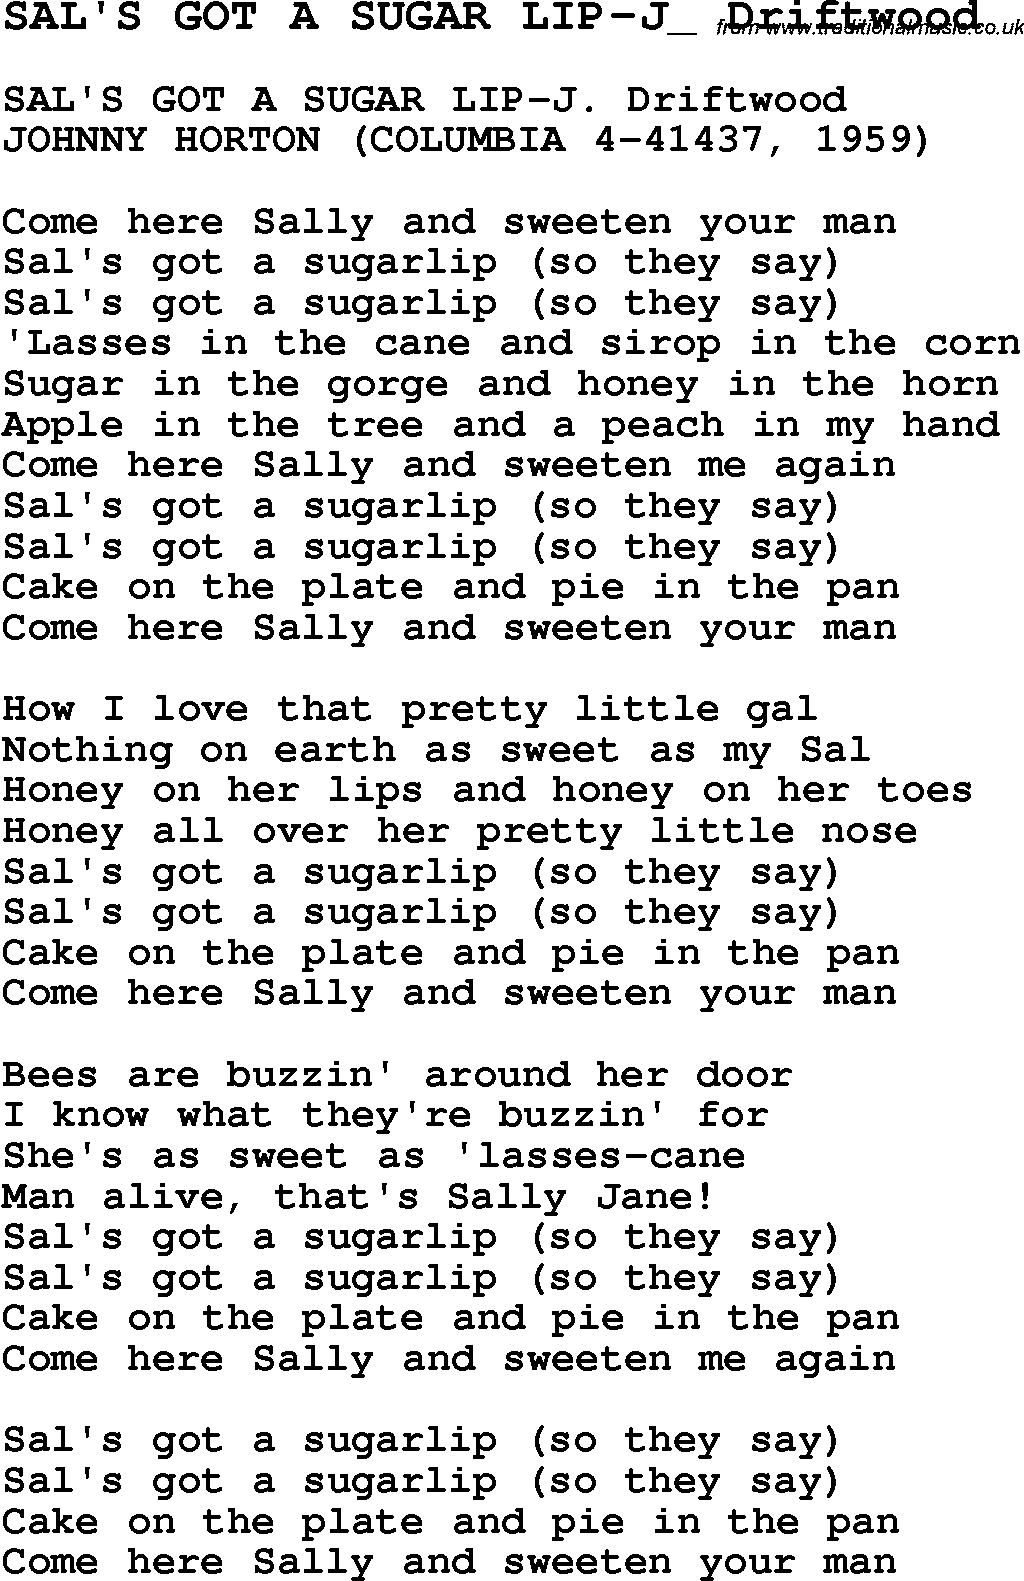 Skiffle Song Lyrics for Sal's Got A Sugar Lip-J Driftwood.